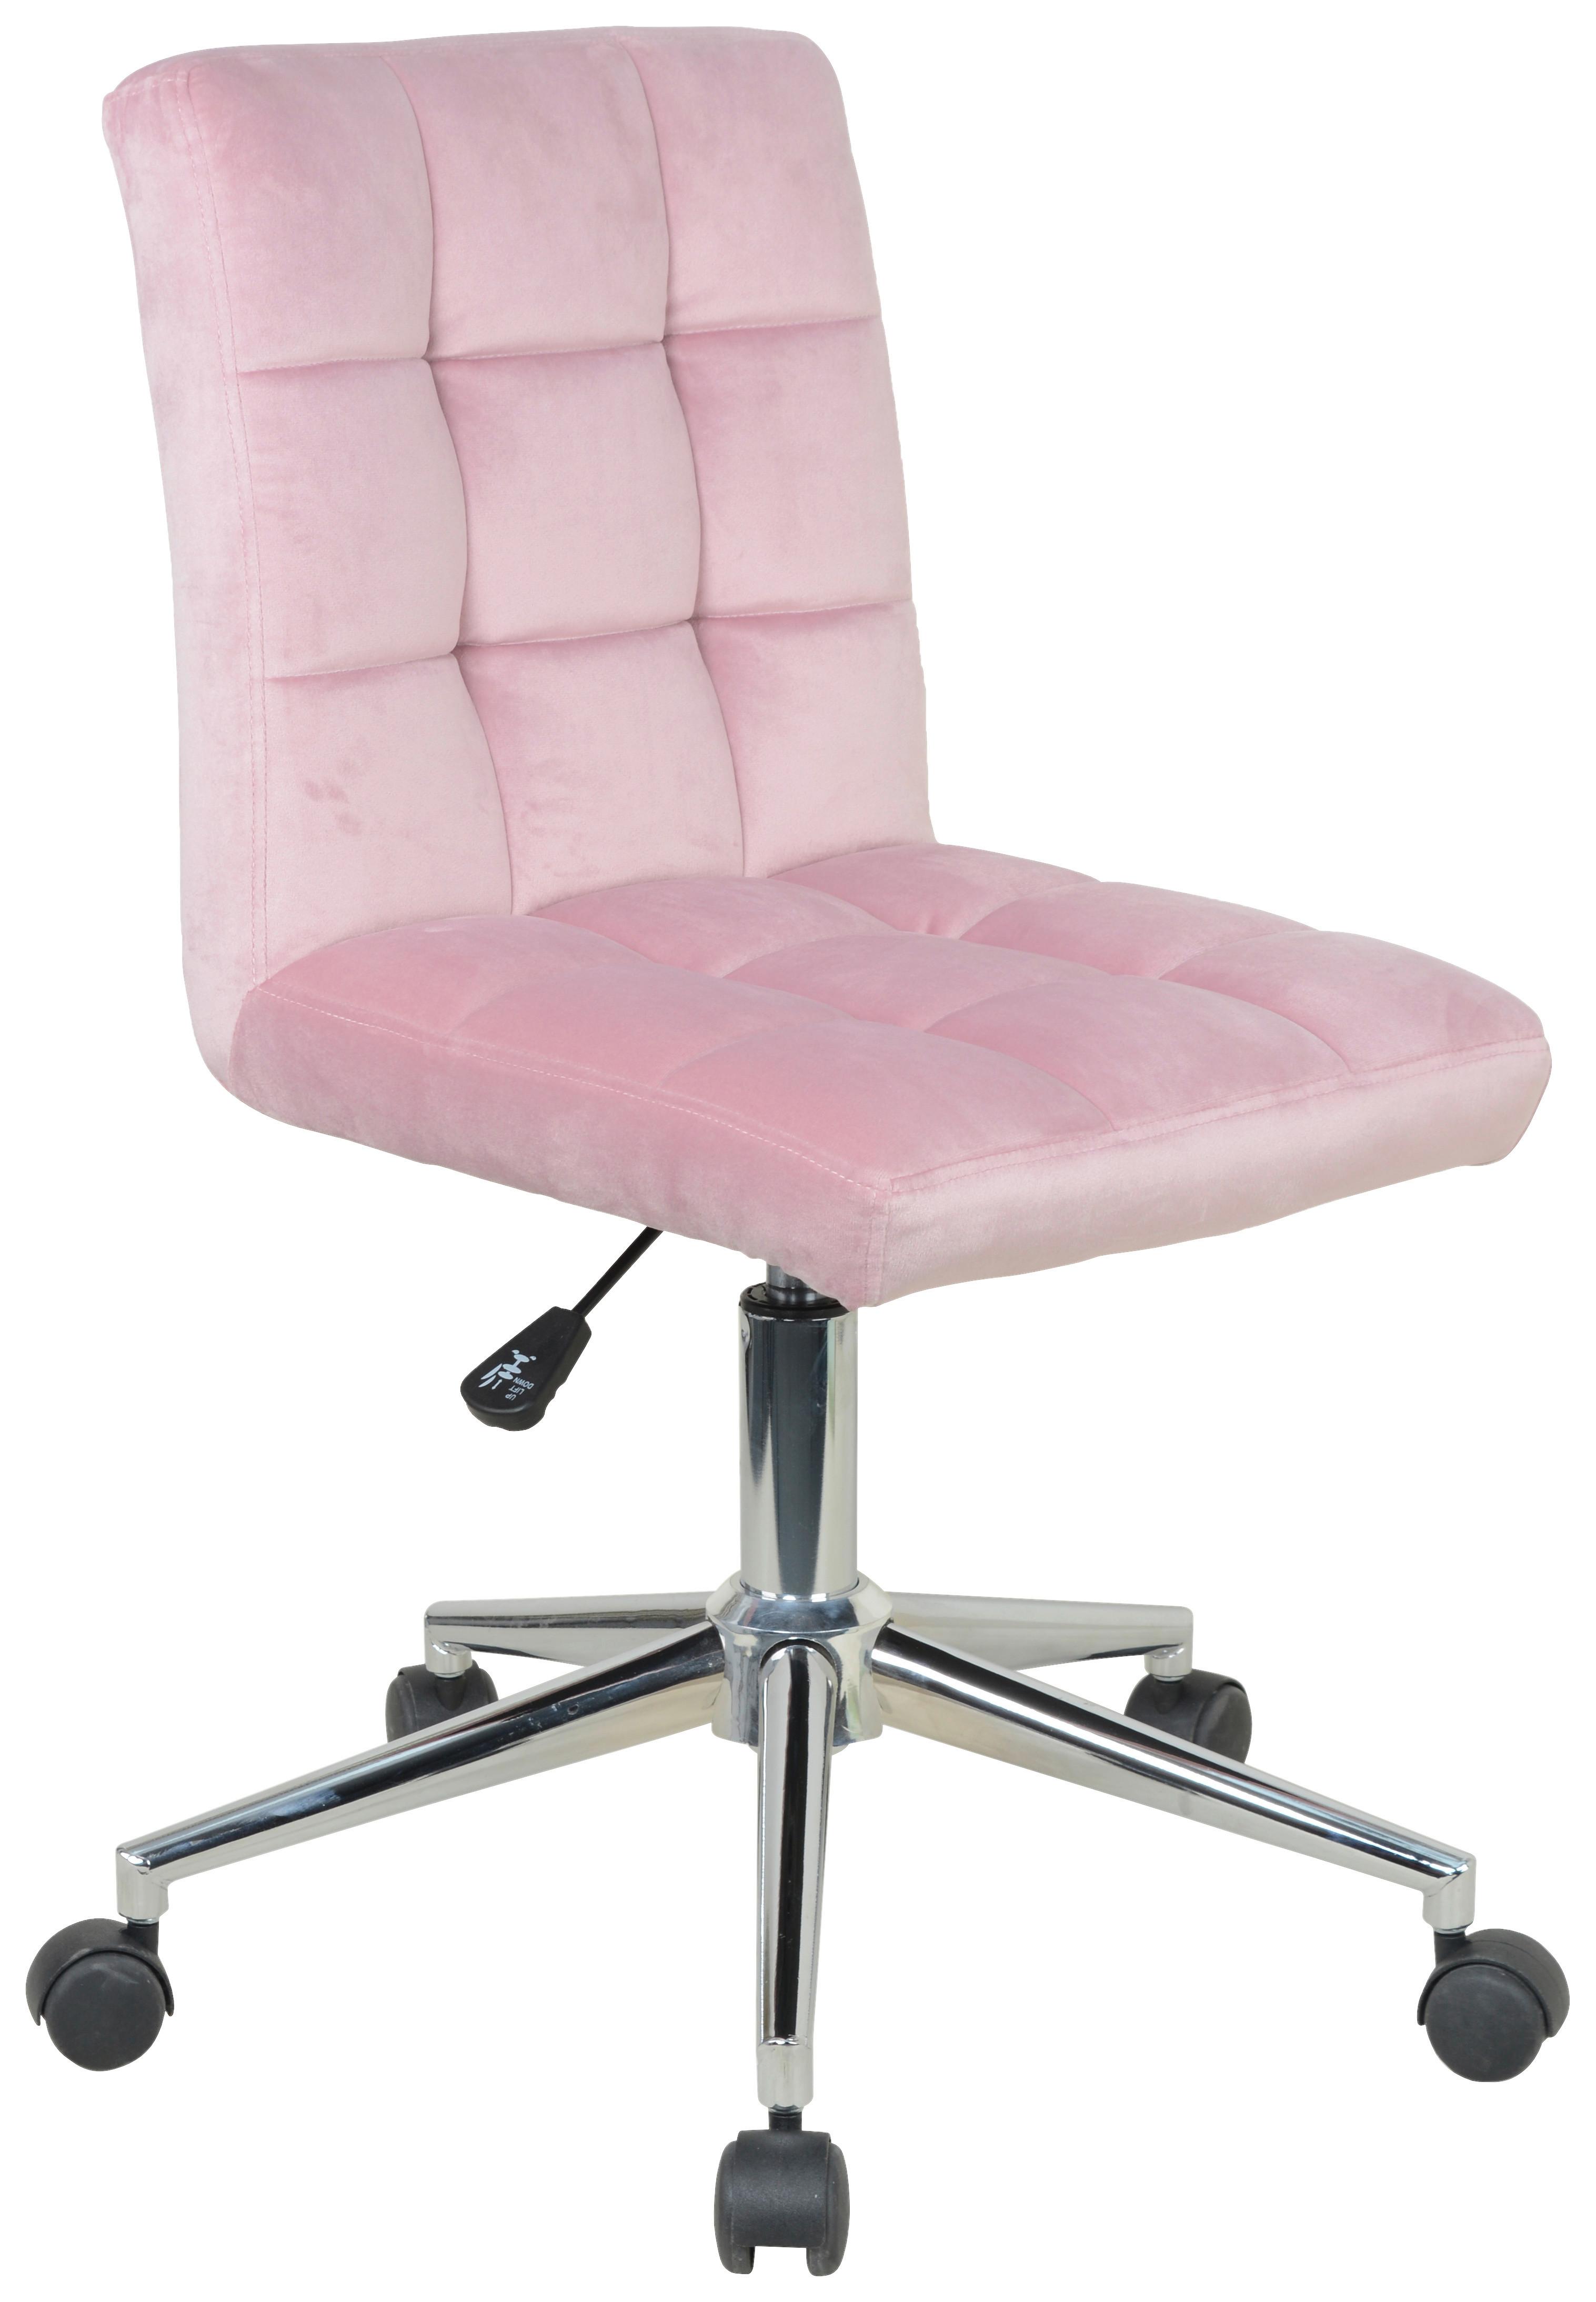 Vrtljivi Stol Easy - roza/krom, Moderno, kovina/umetna masa (41/79,5-89/54cm) - Modern Living